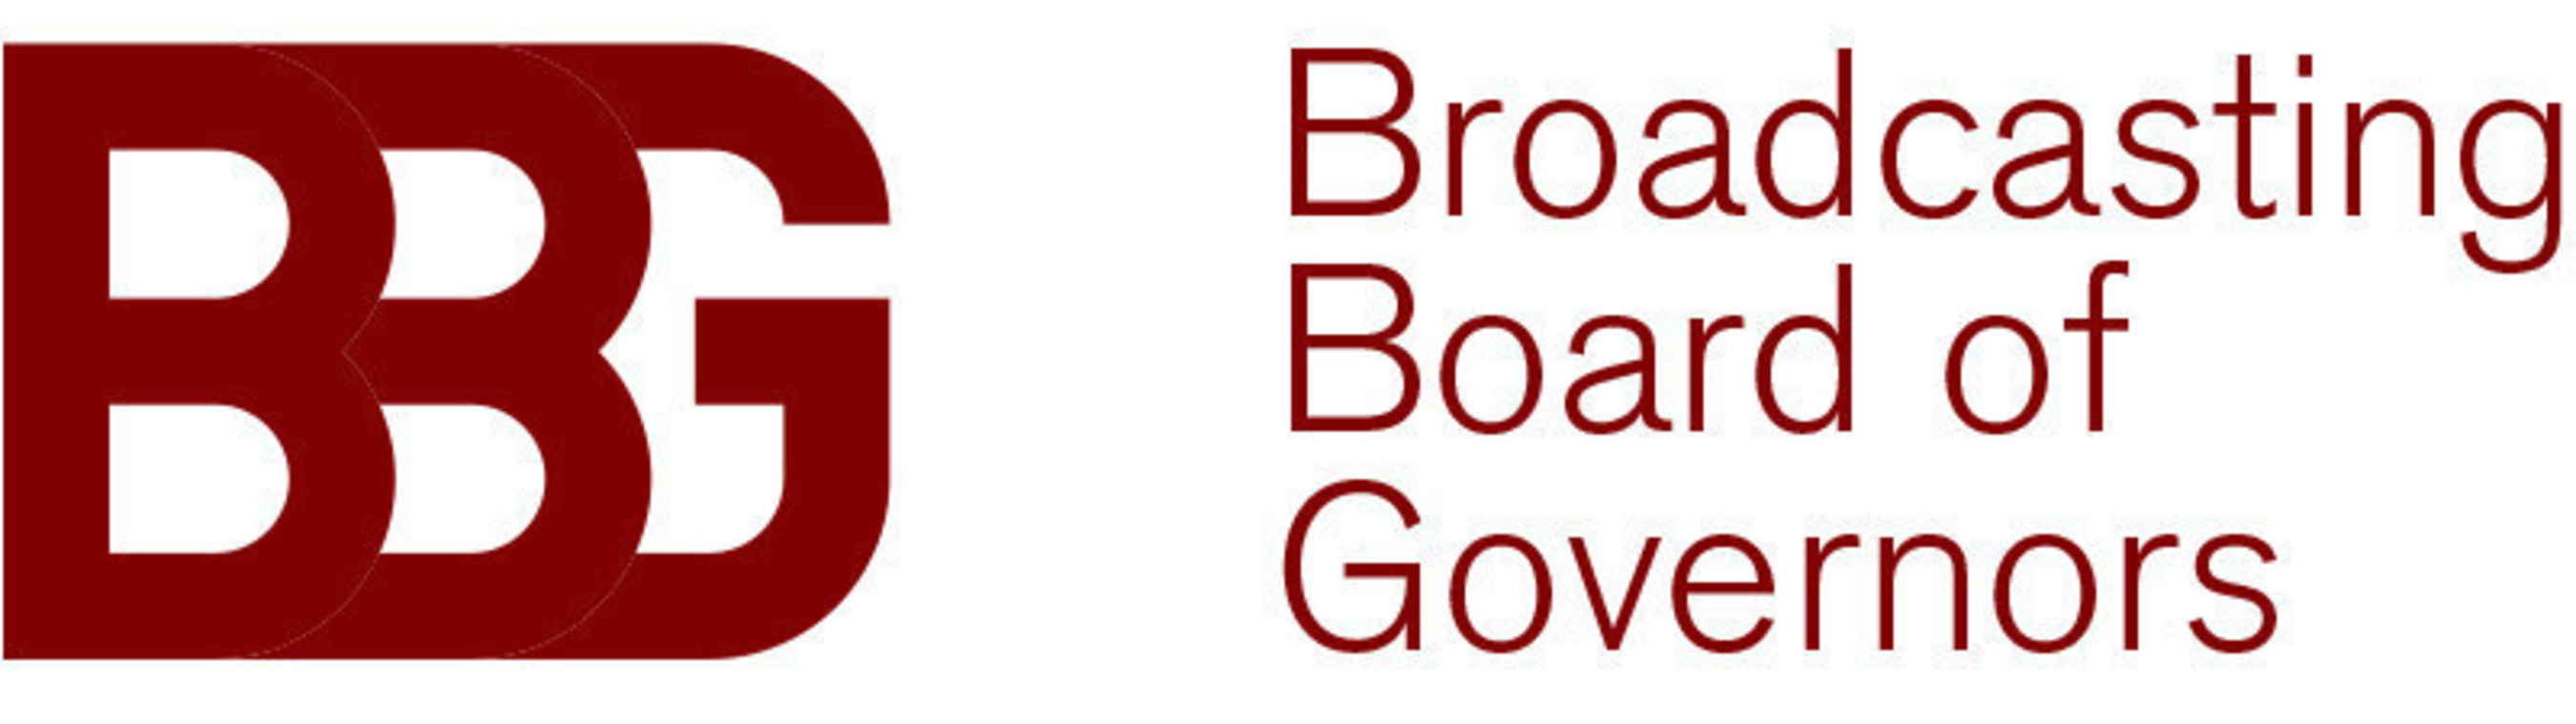 Broadcasting Board of Governors (PRNewsFoto/Broadcasting Board of Governors)